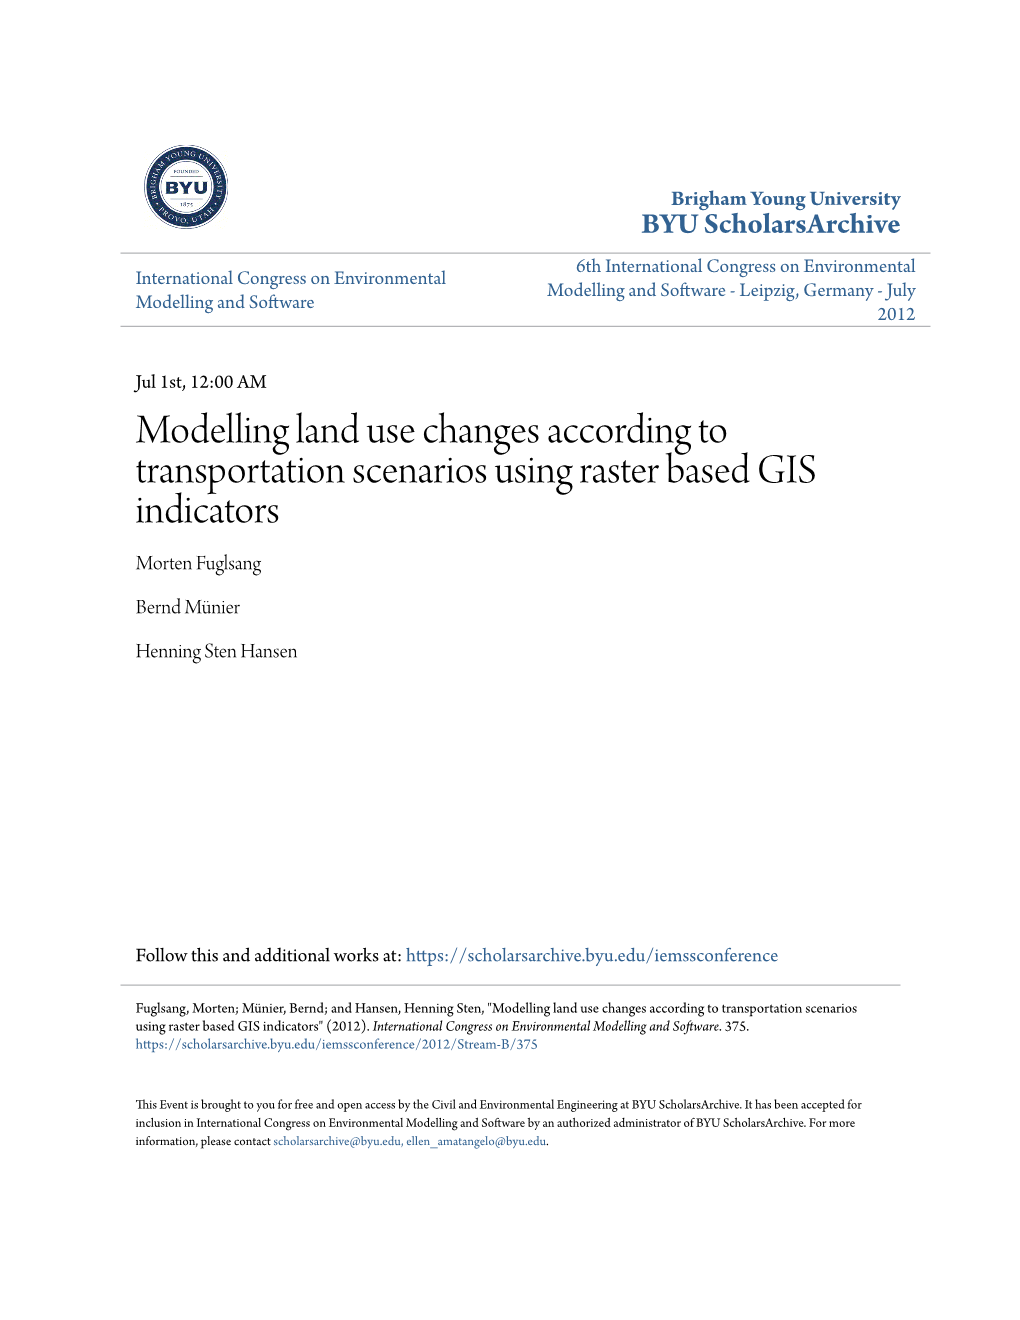 Modelling Land Use Changes According to Transportation Scenarios Using Raster Based GIS Indicators Morten Fuglsang